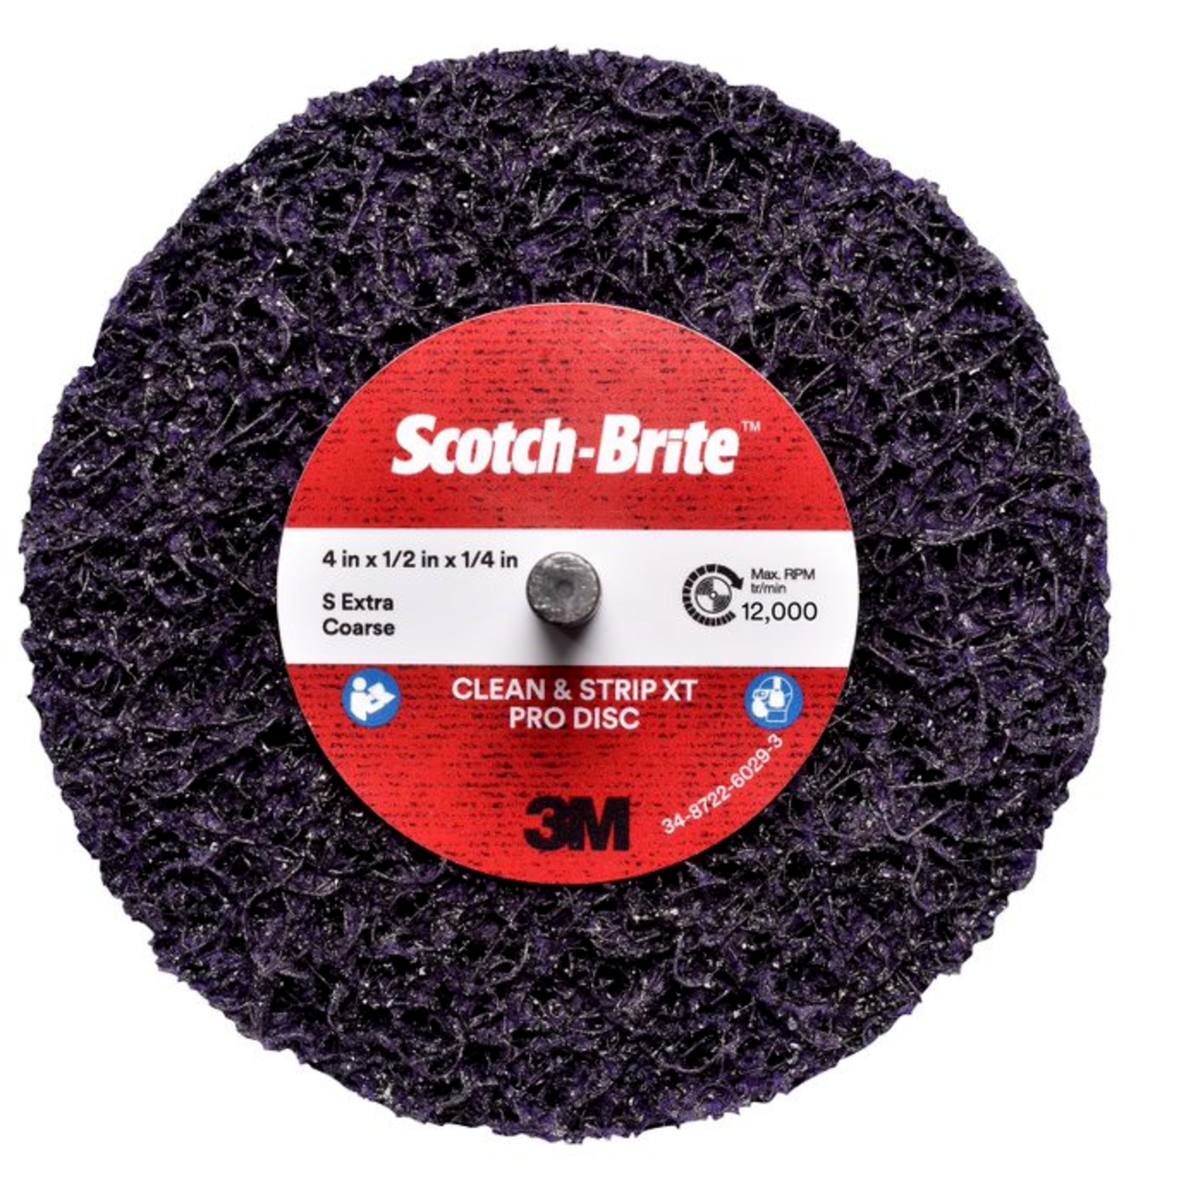 3M Scotch-Brite disco per pulizia grossolana XT-ZS Pro, 75 mm, 13 mm, 6 mm, S, extra grossolano